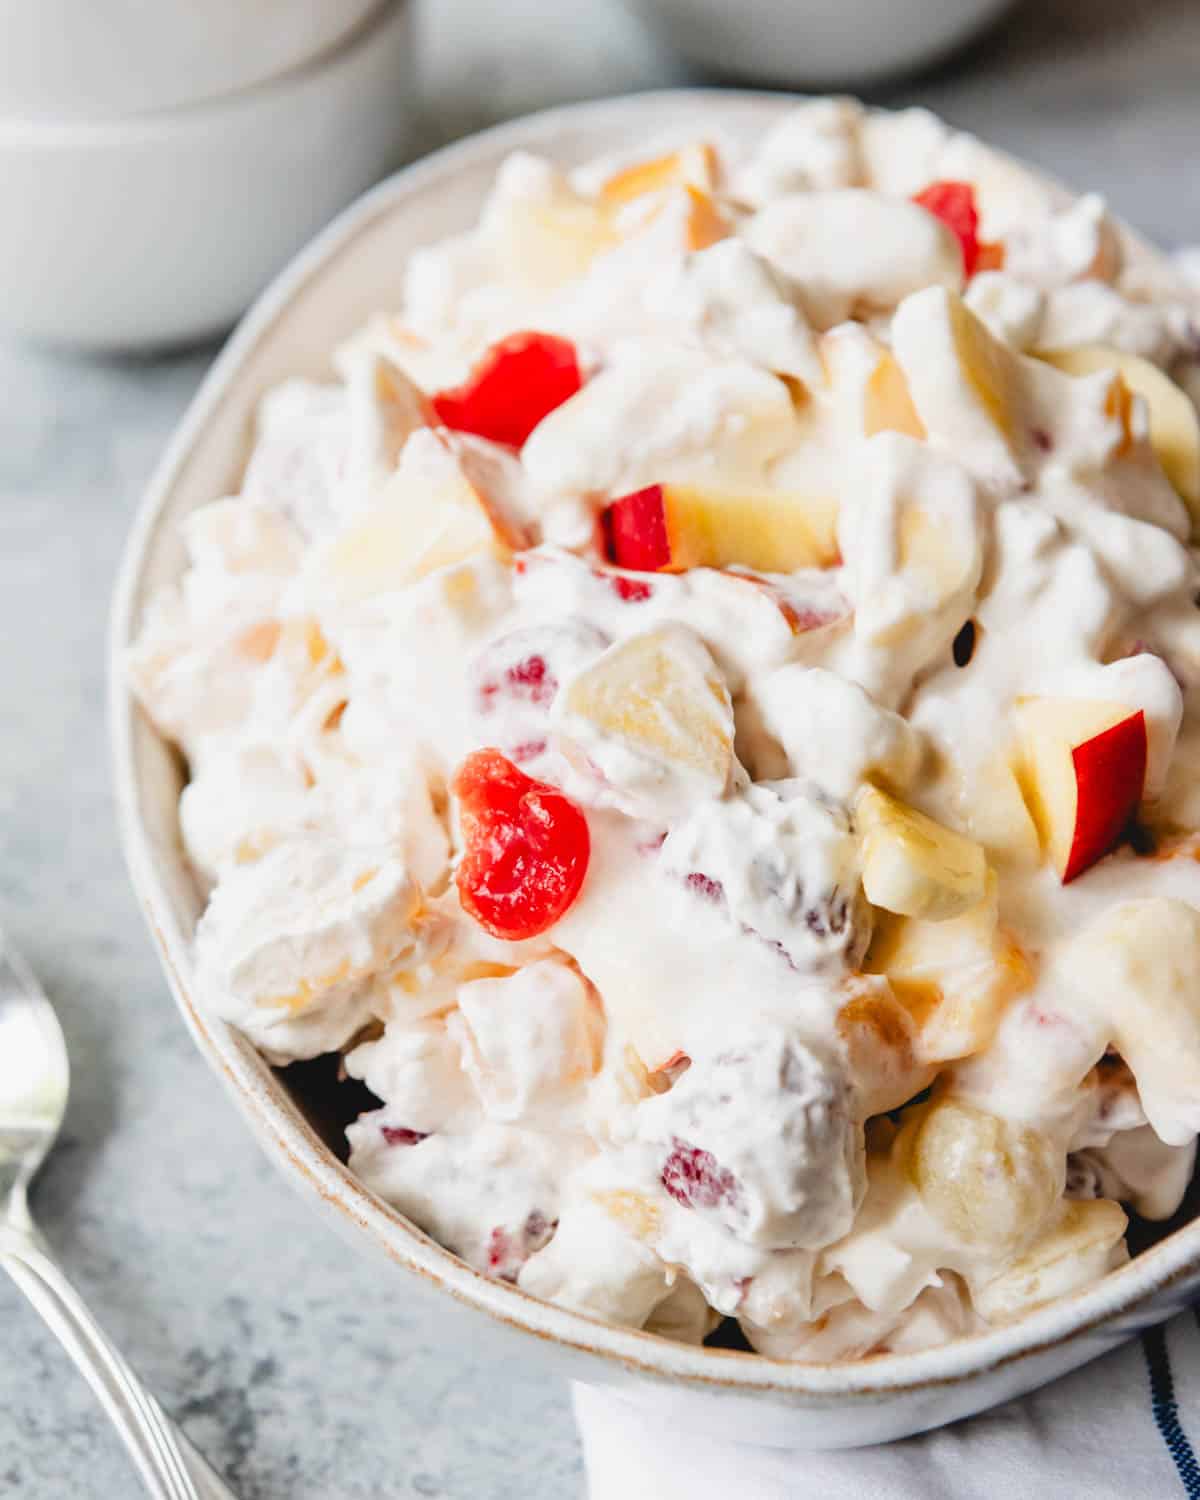 https://houseofnasheats.com/wp-content/uploads/2019/01/FBEasy-Fruit-Salad-with-Marshmallows-1.jpg